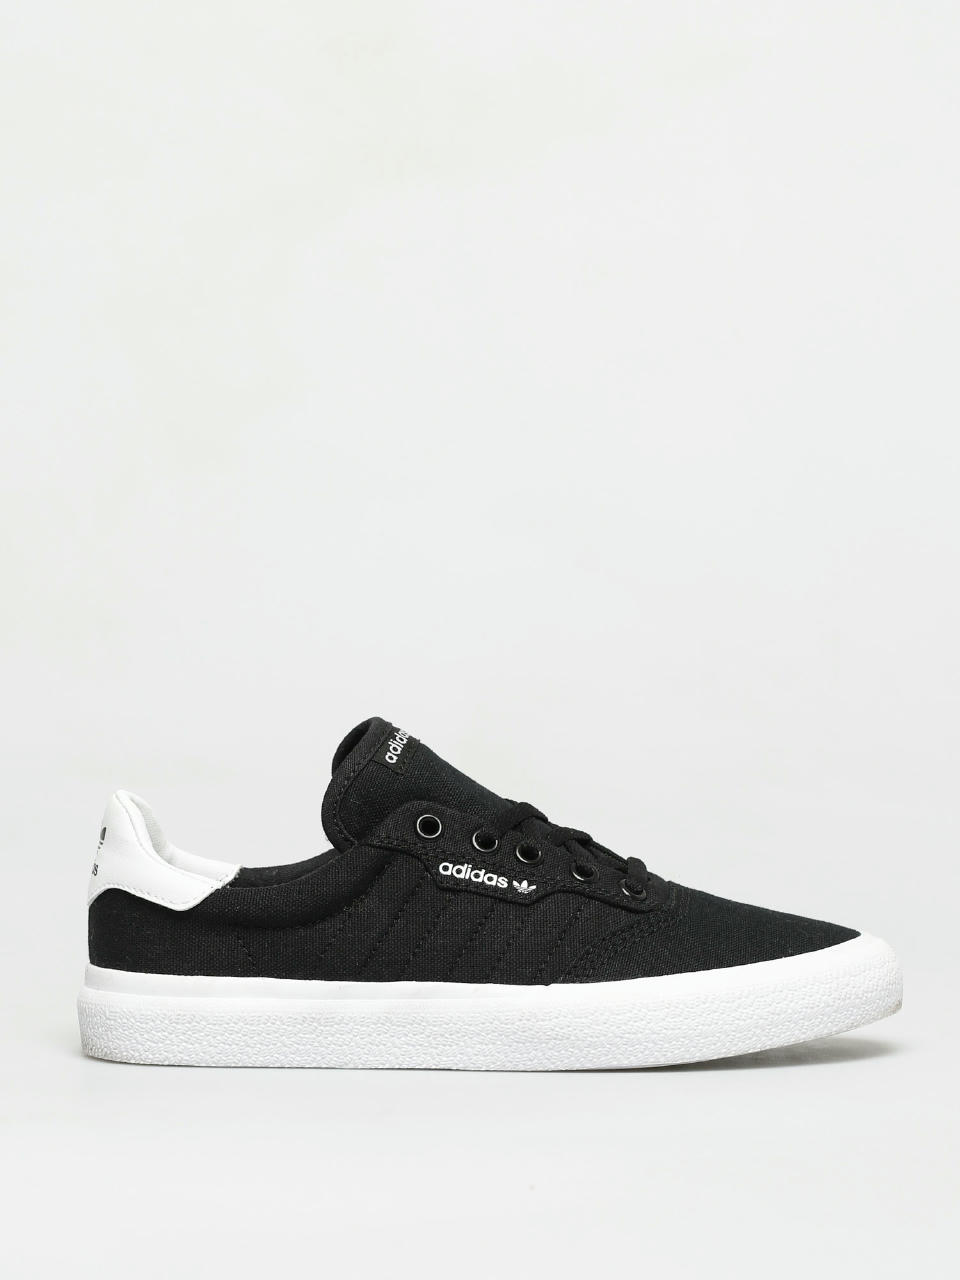 adidas 3Mc Shoes (core black/core black/ftwr white)